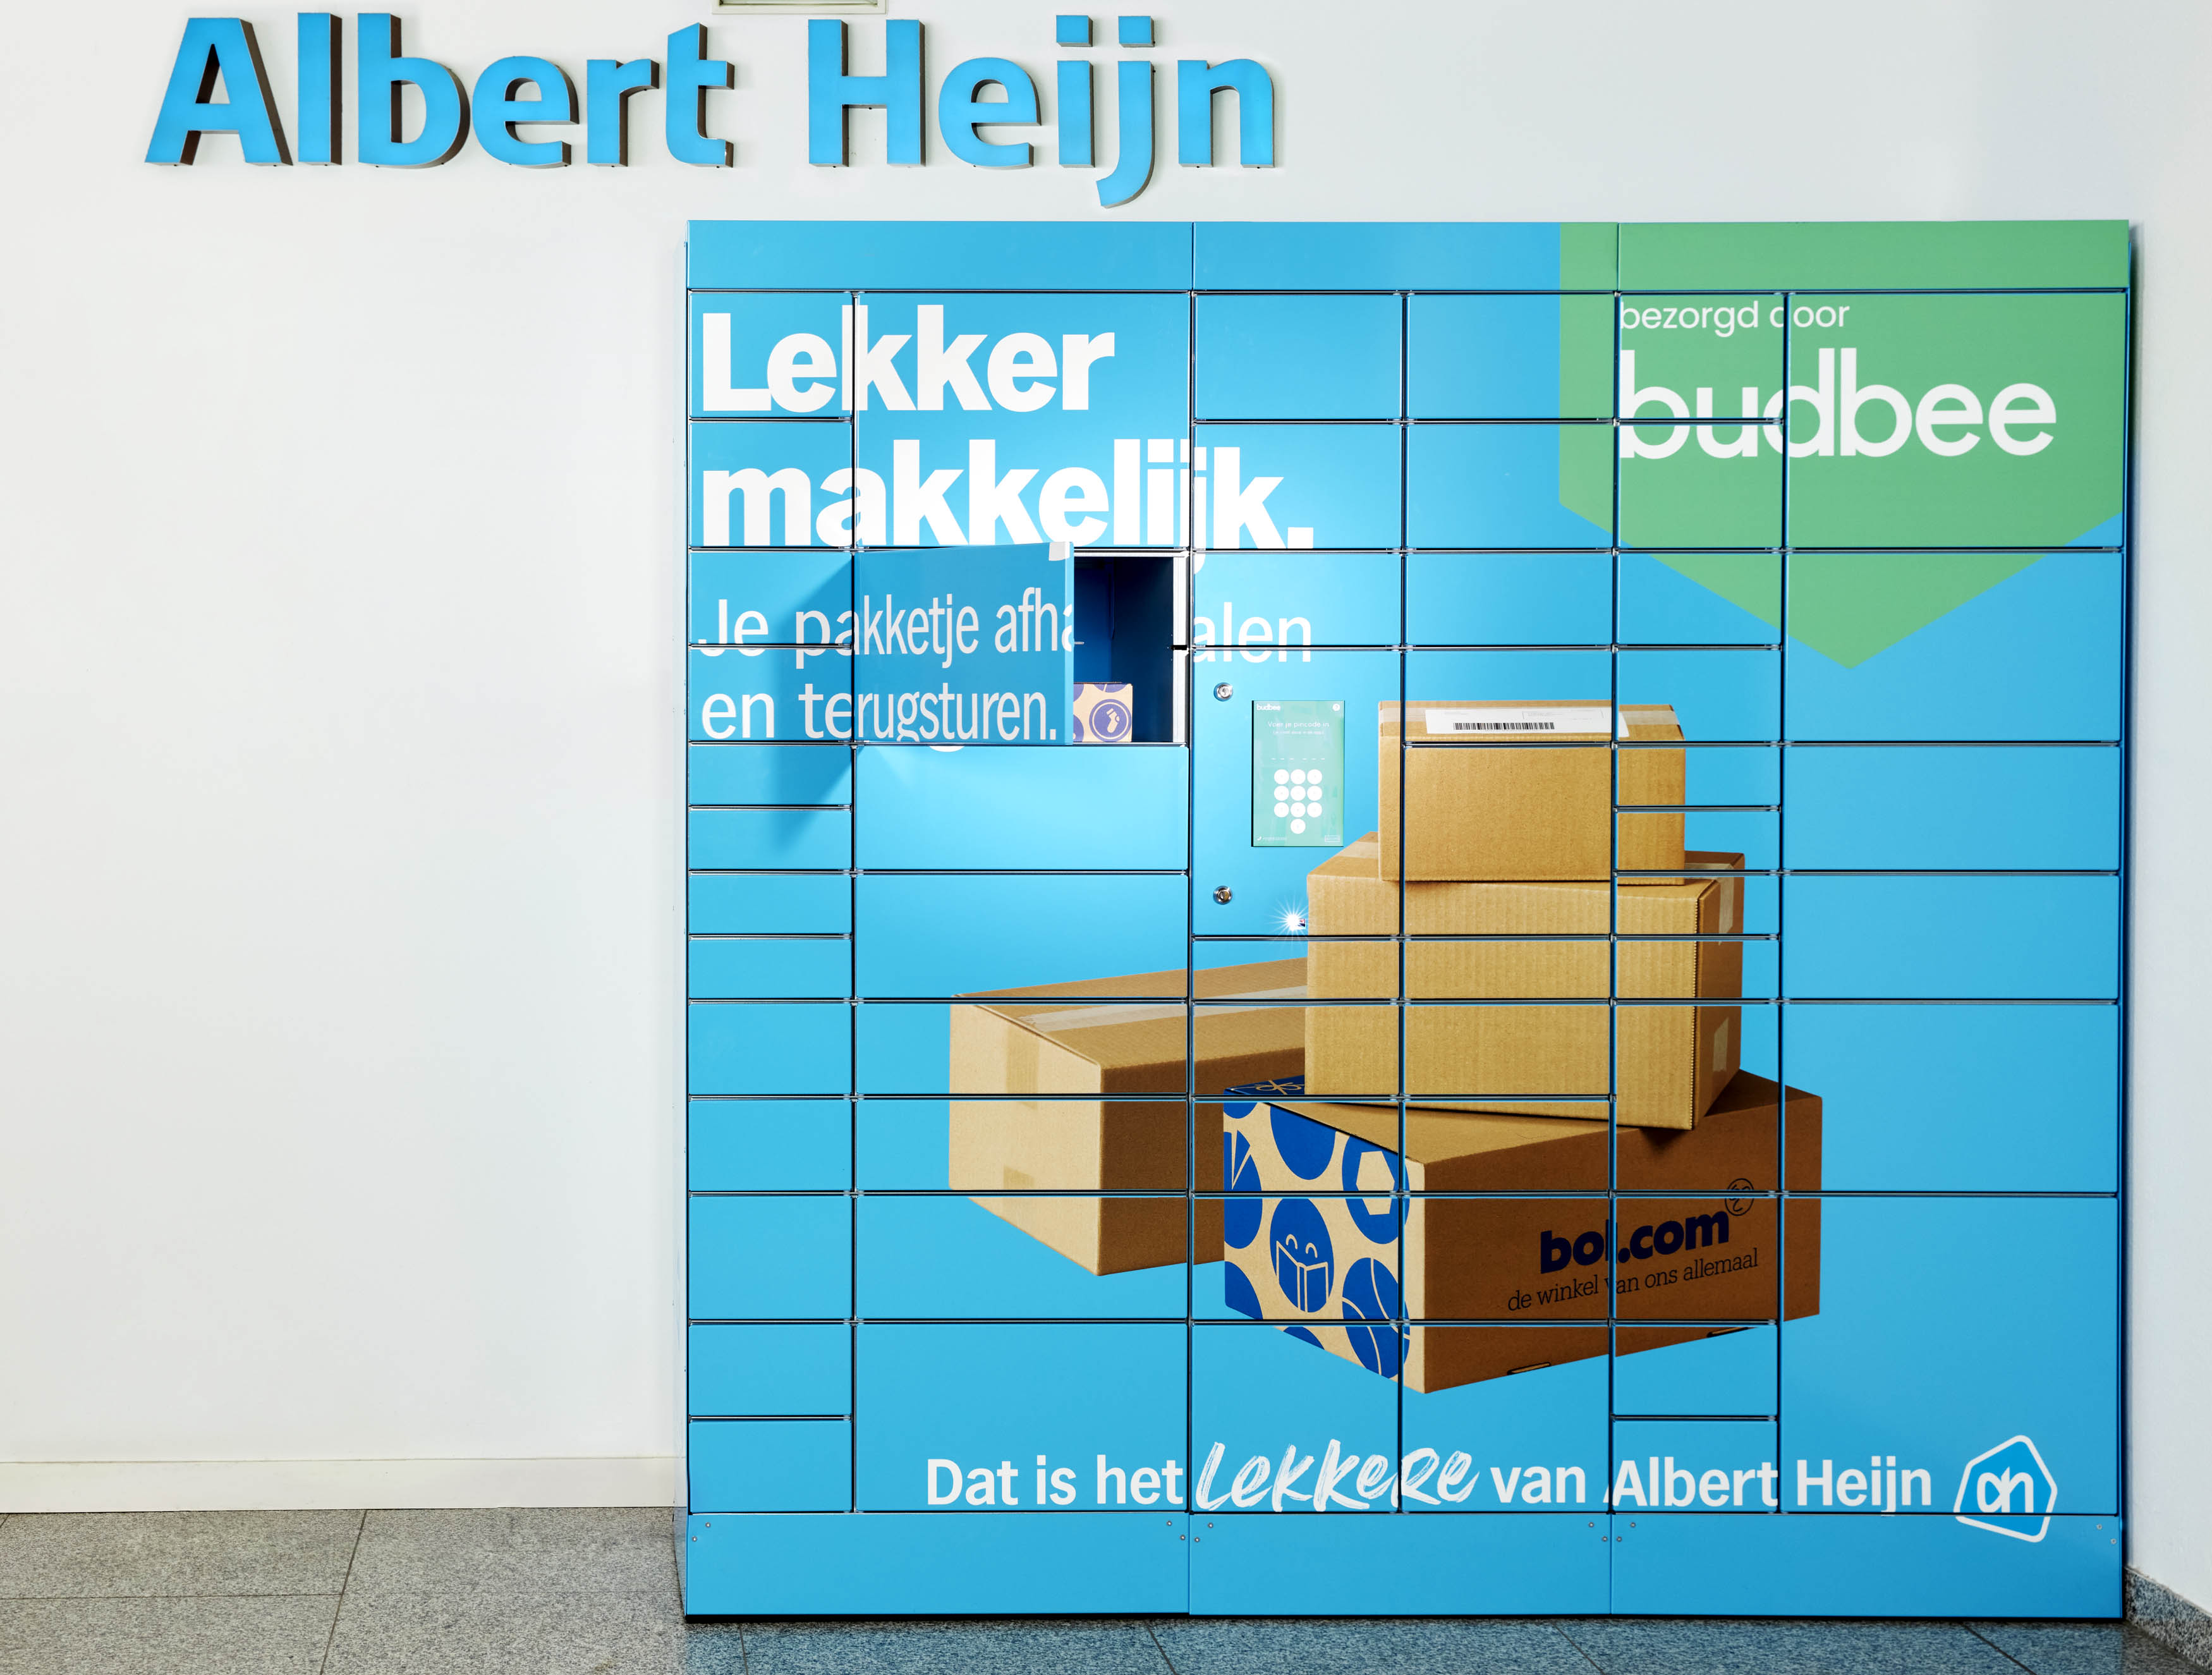 preambule Springplank Vliegveld Albert Heijn, bol.com and Budbee introduce parcel lockers